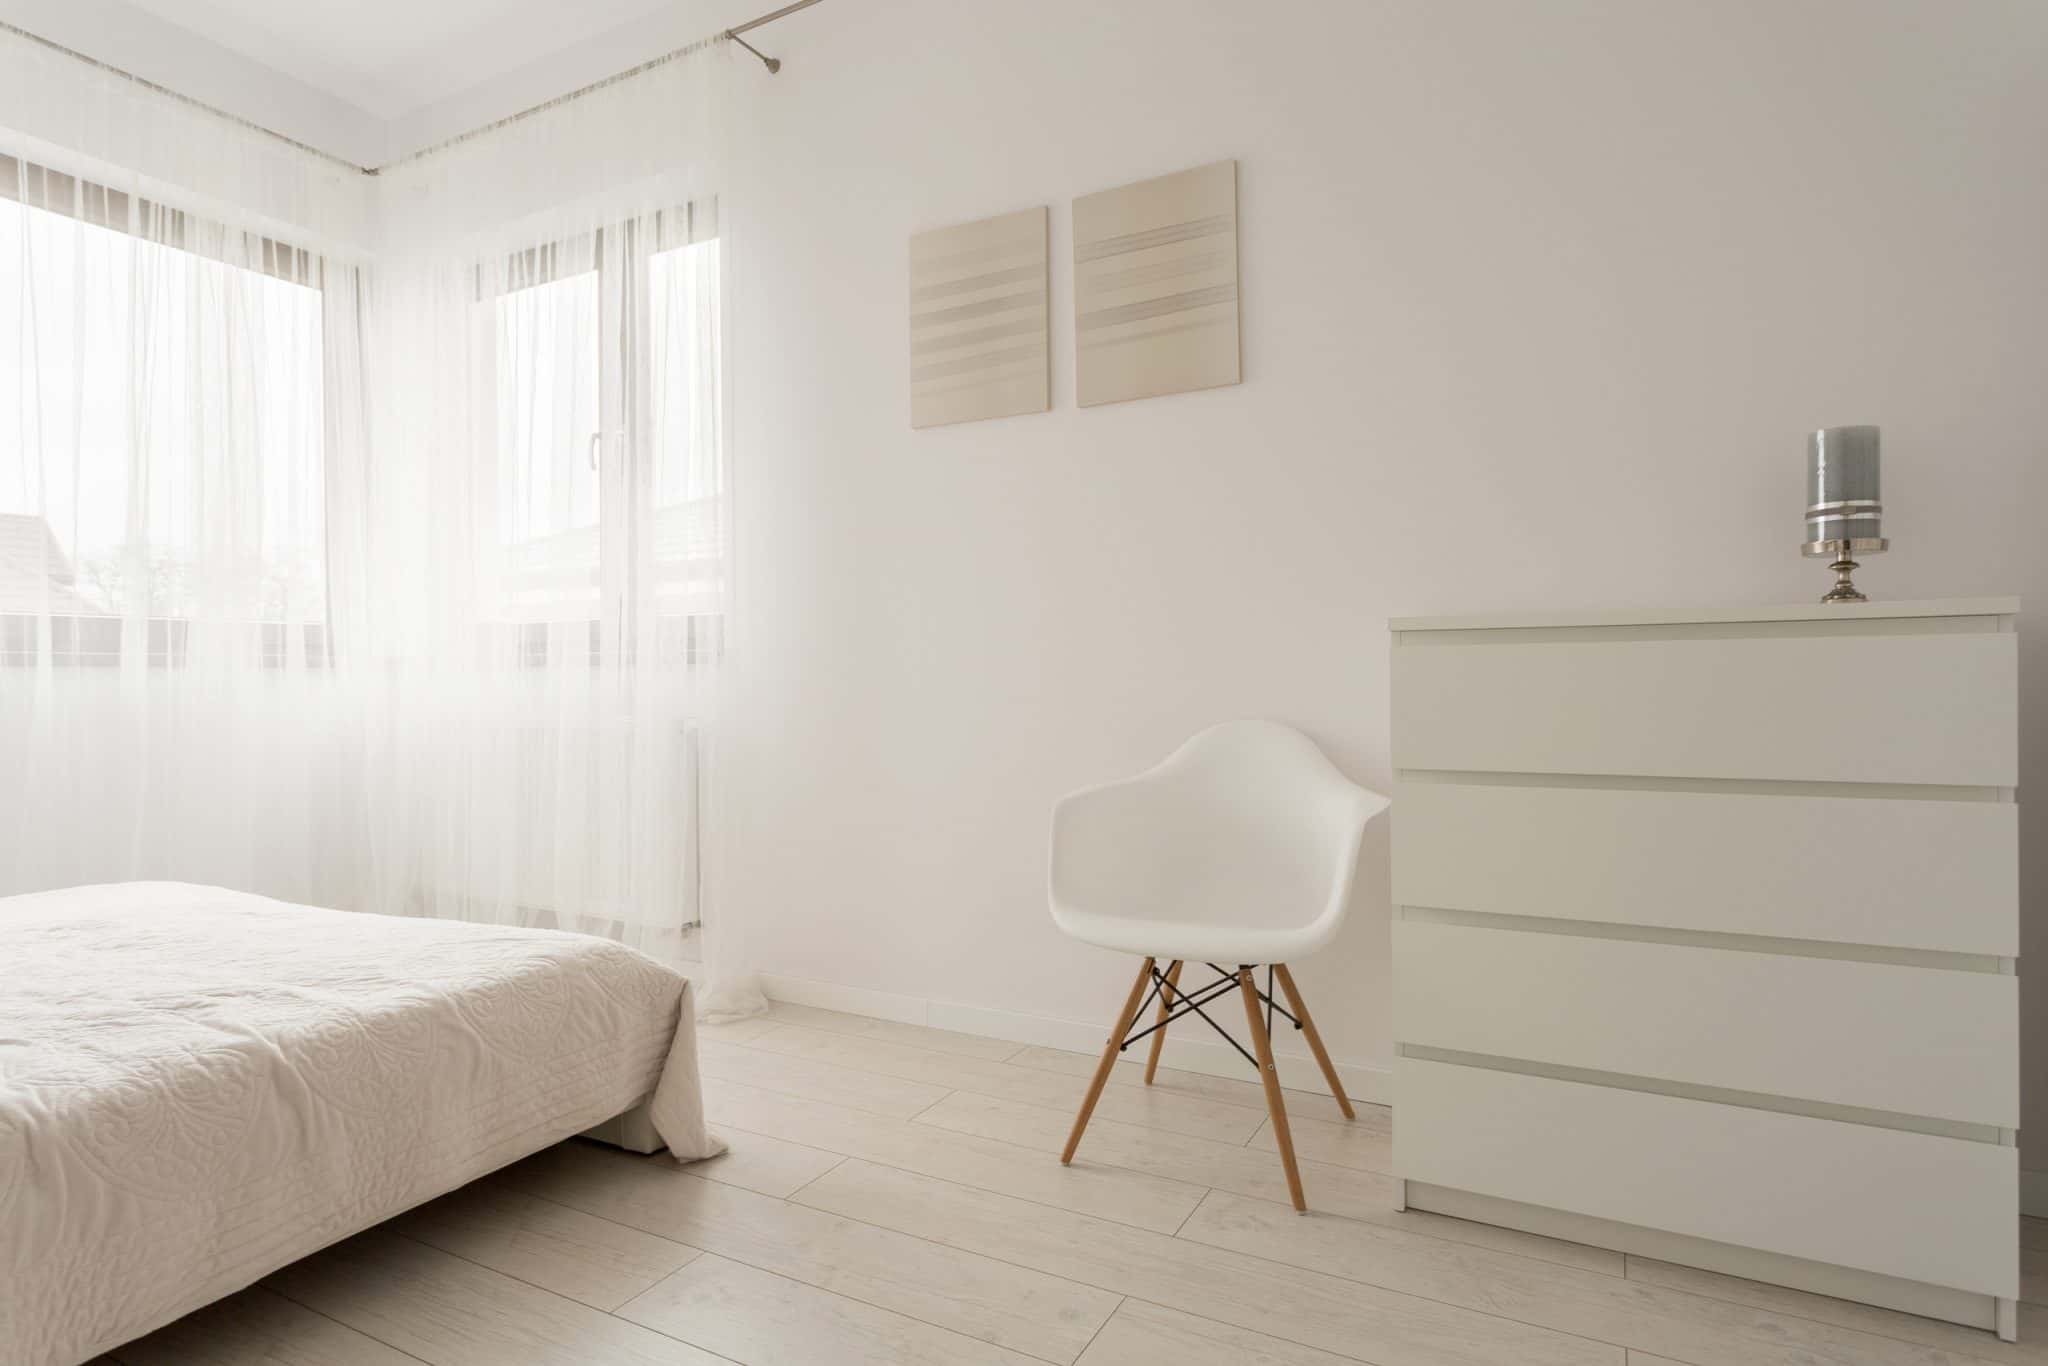 Simple exclusive white bedroom wooden parquet